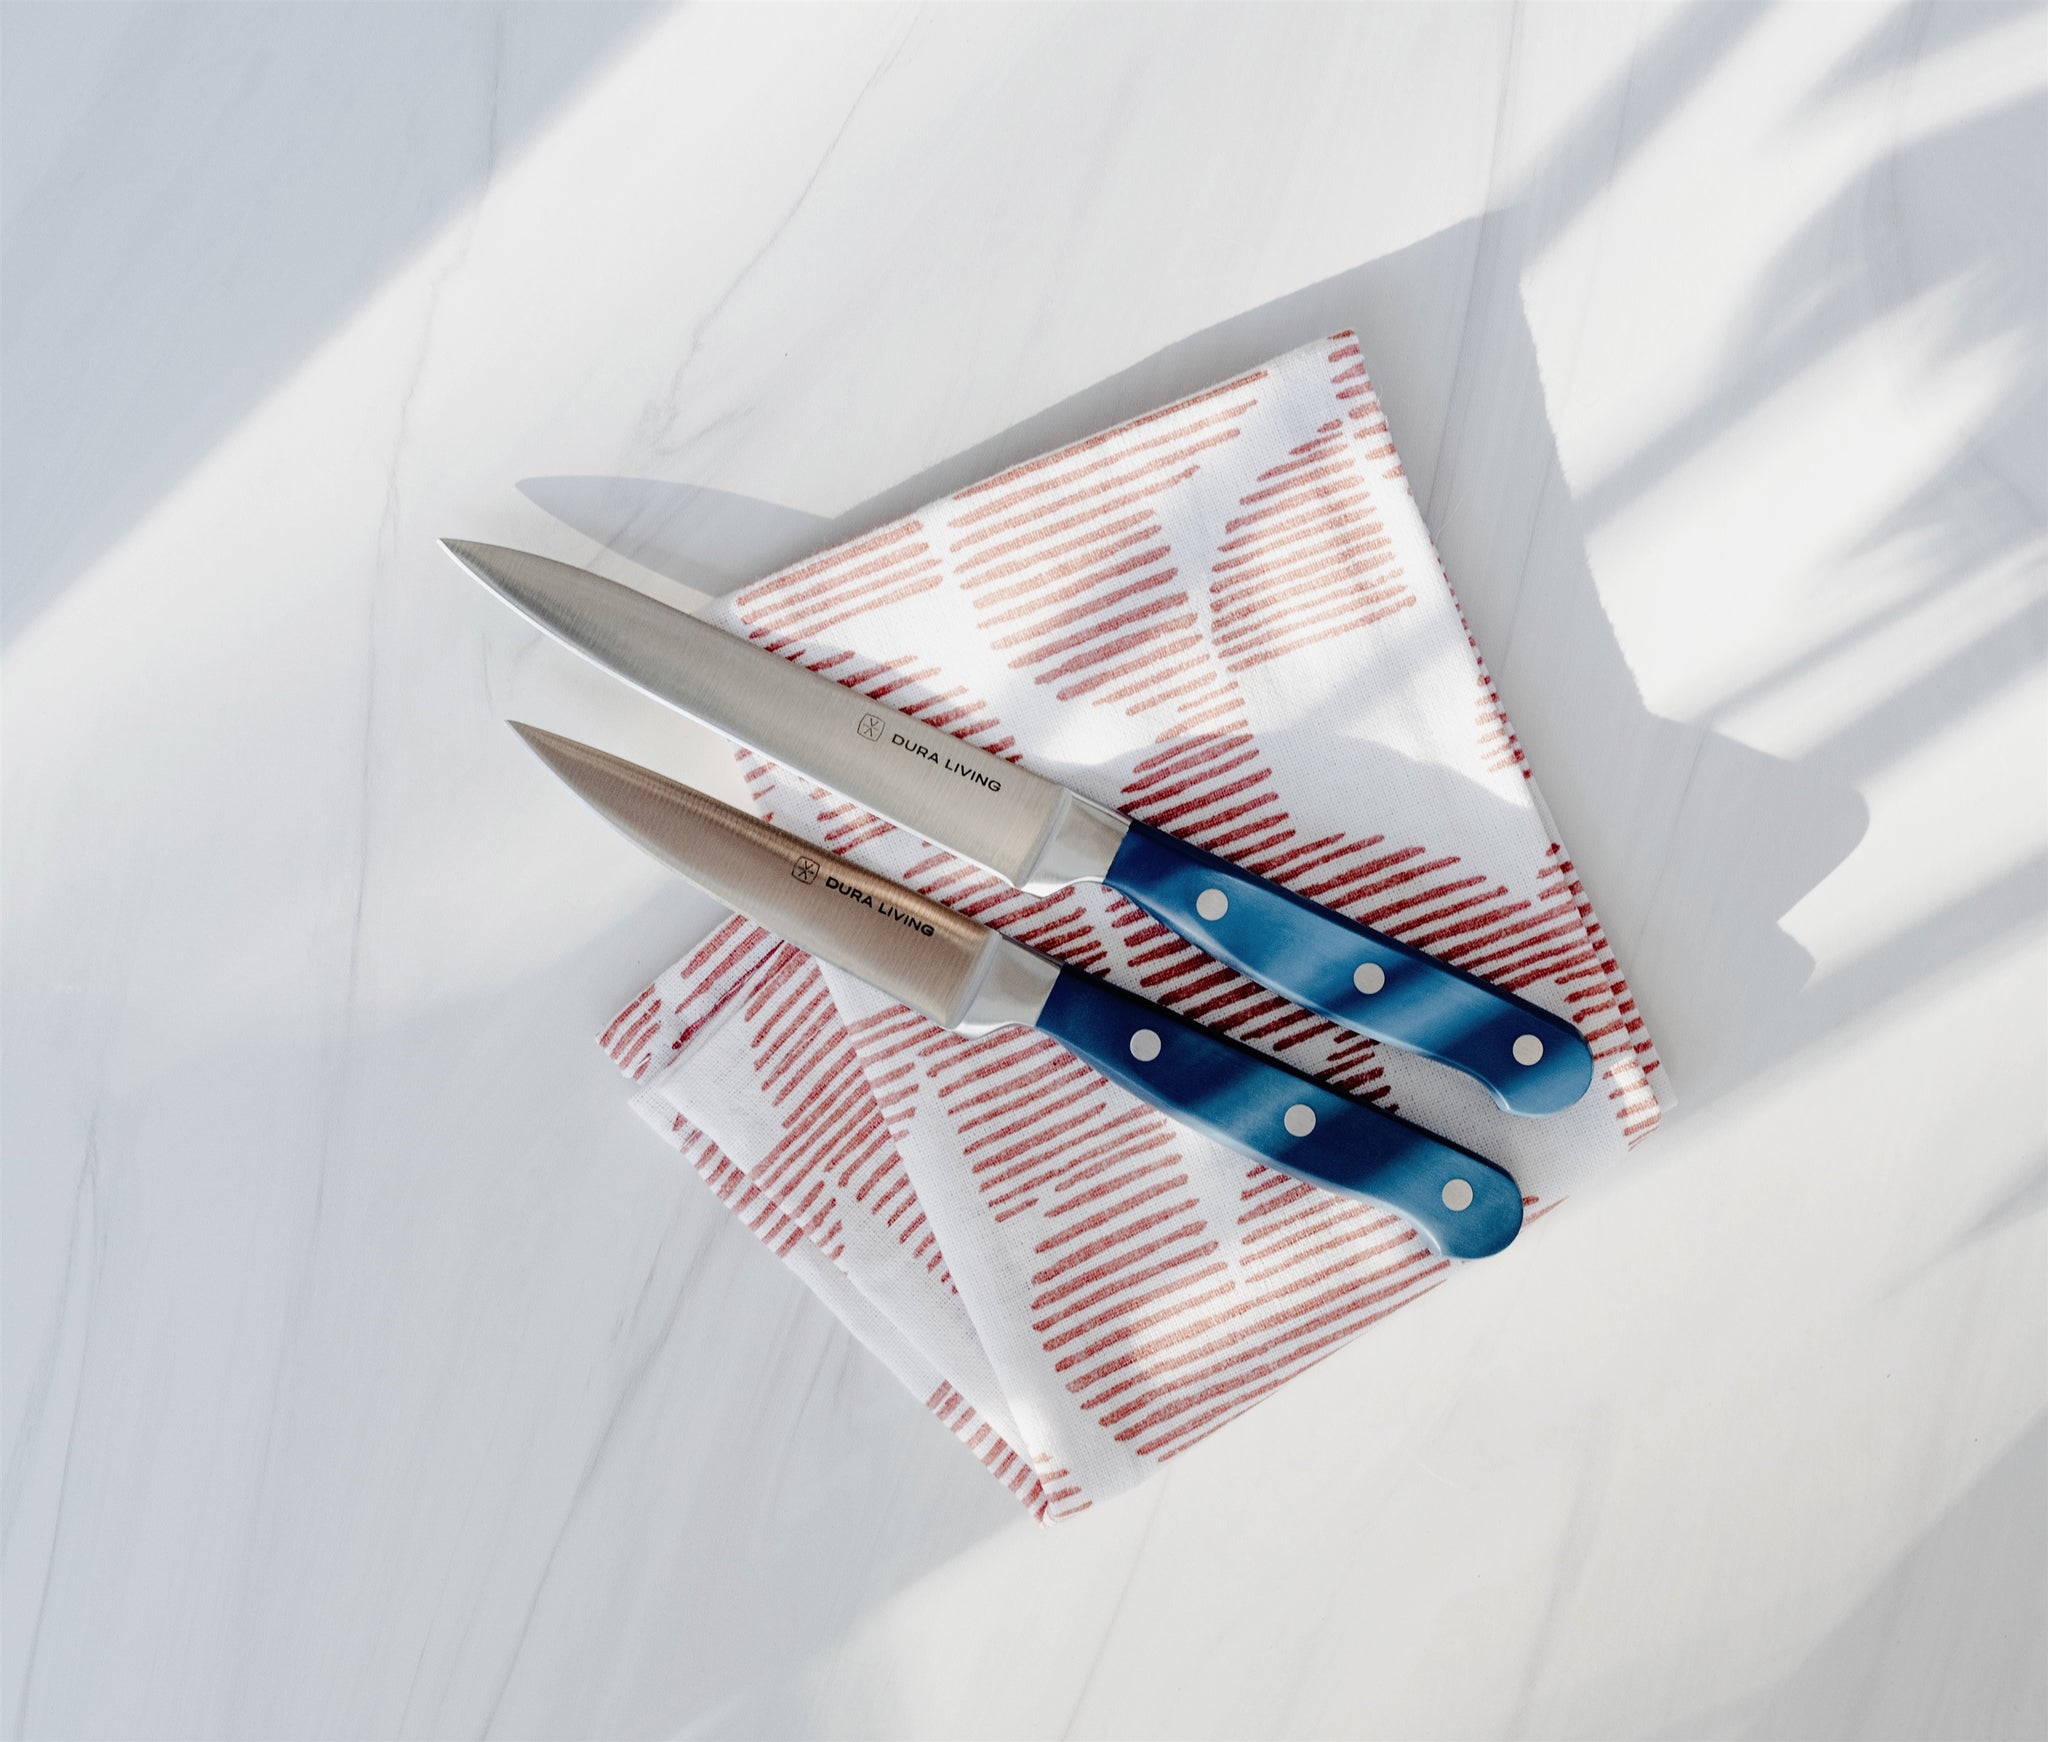 Dura Living – 3 Piece Printed Knife Set